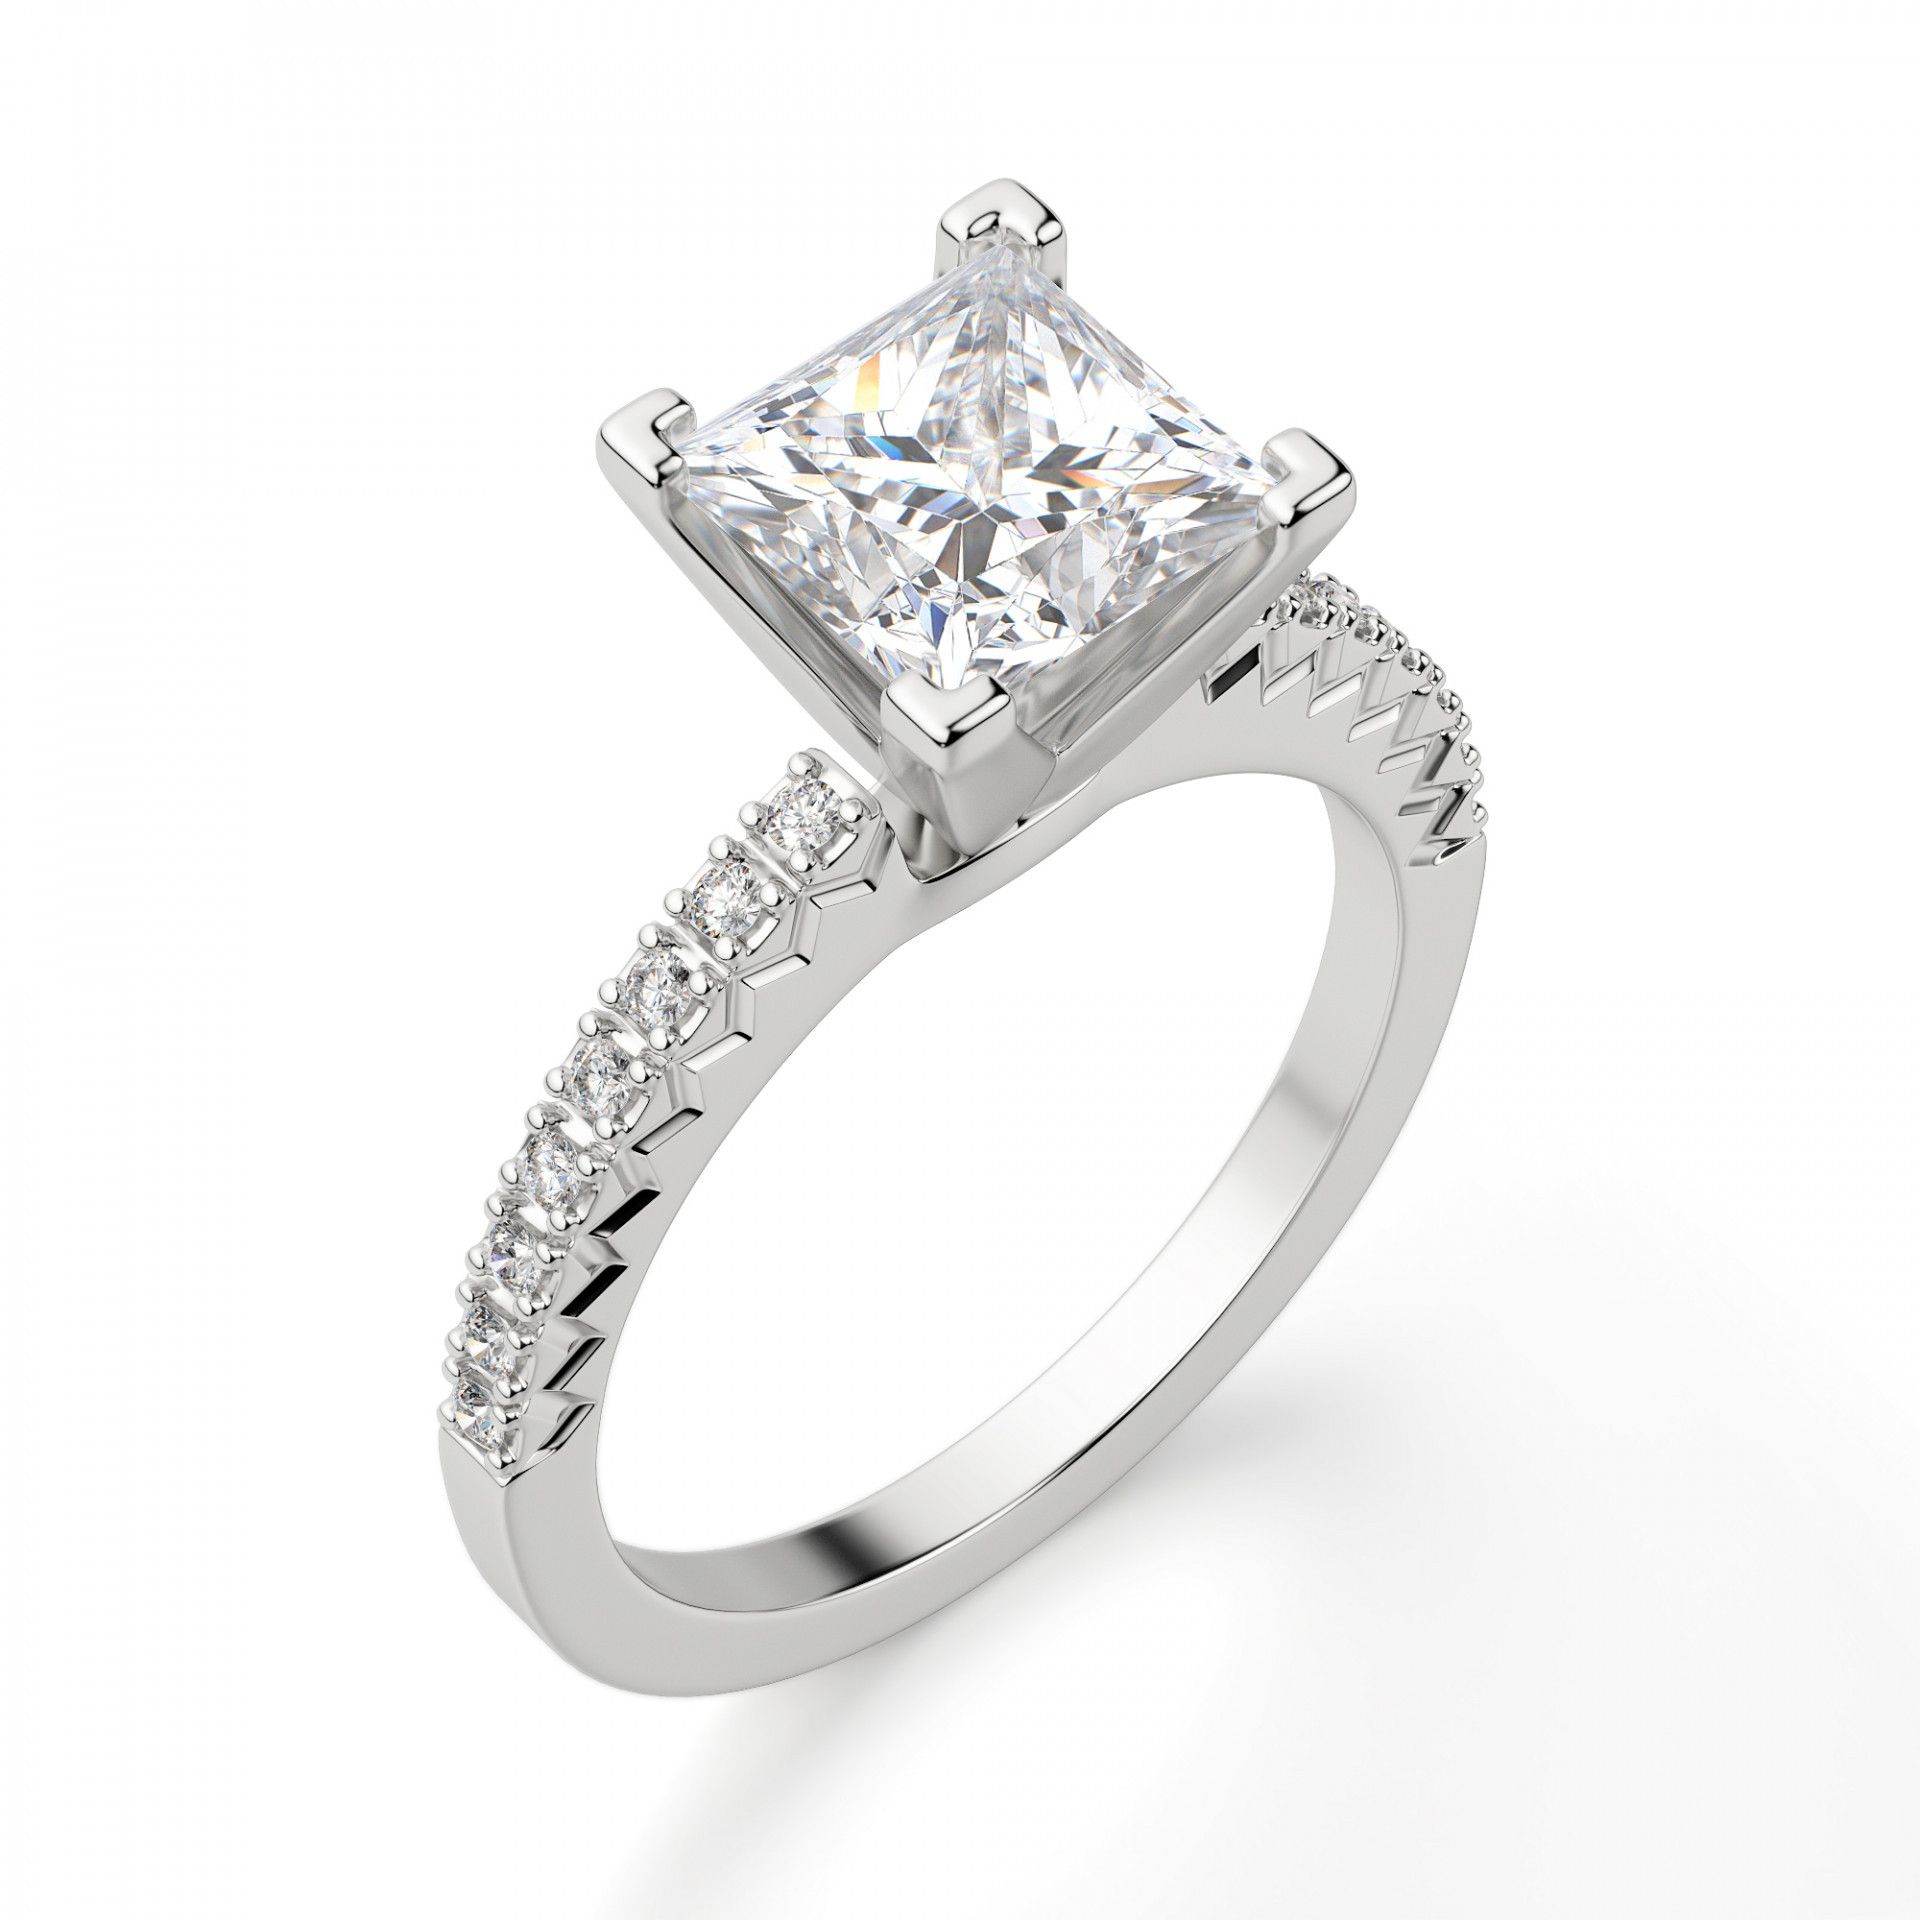 Princes Cut Wedding Rings
 Angelix Princess Cut Engagement Ring